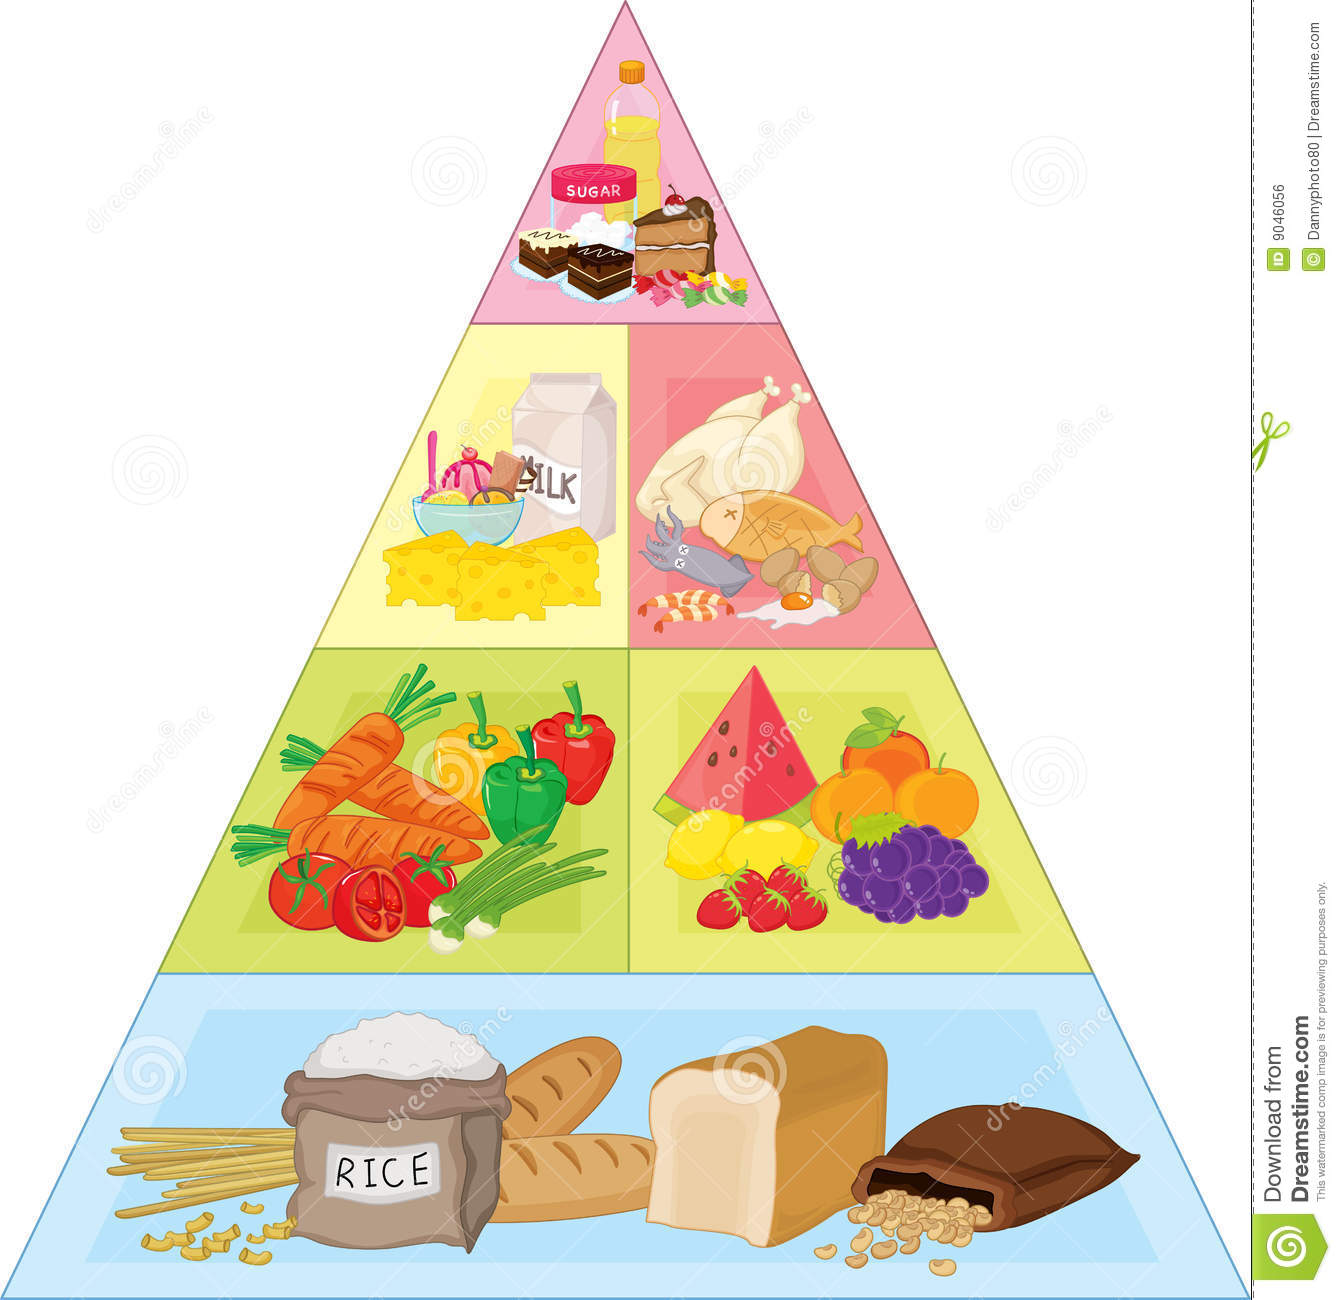 Food Pyramid Royalty Free Stock Image   Image  9046056